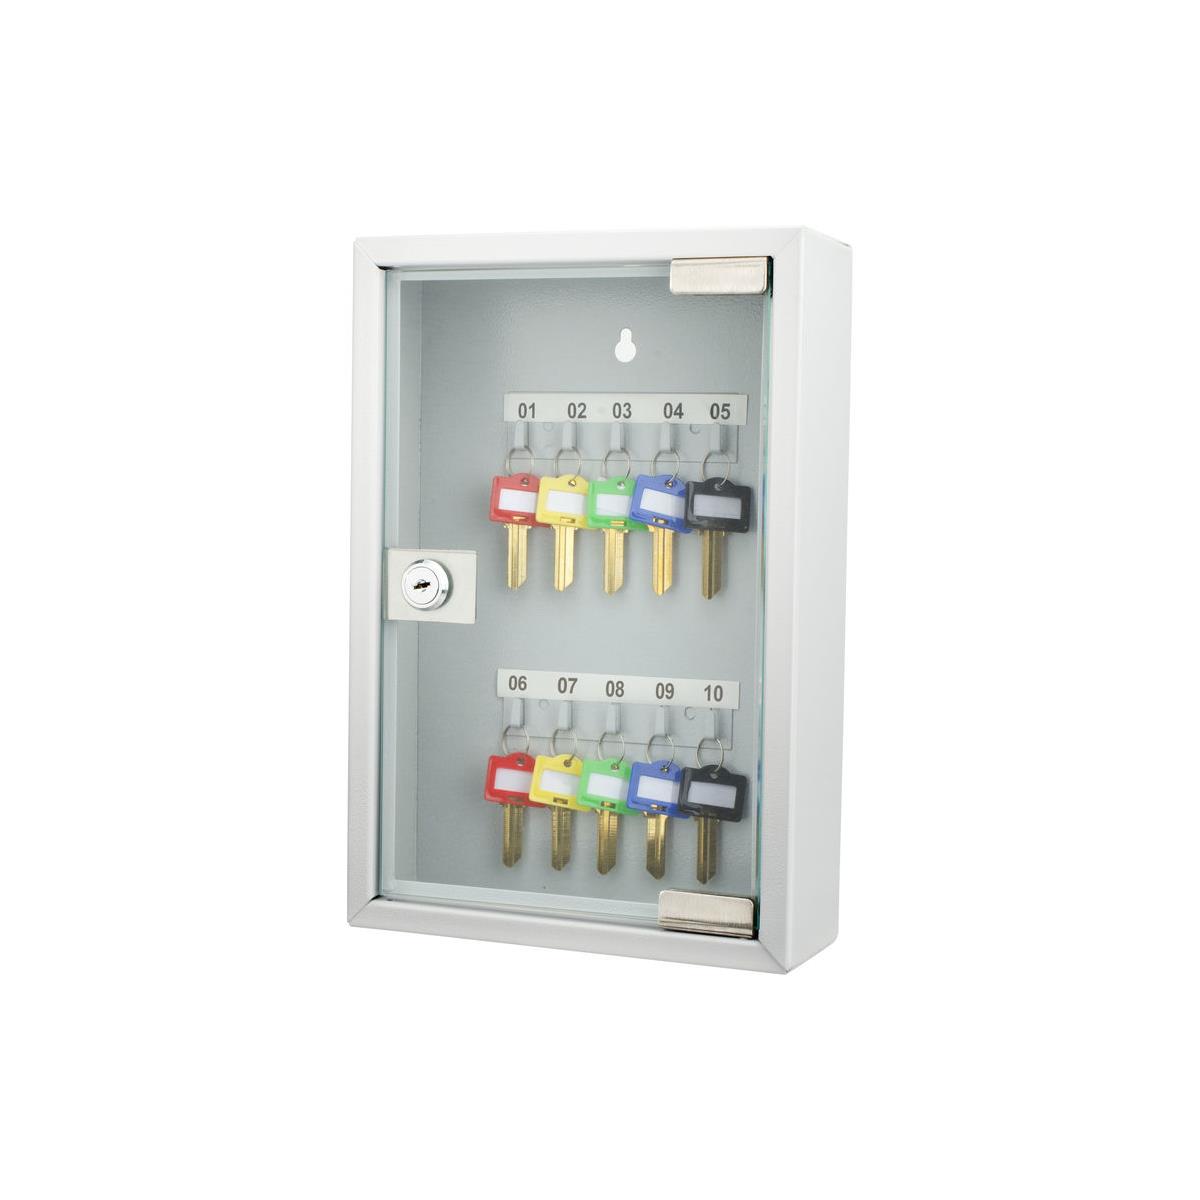 Image of Barska 10 Position Key Cabinet with Glass Door